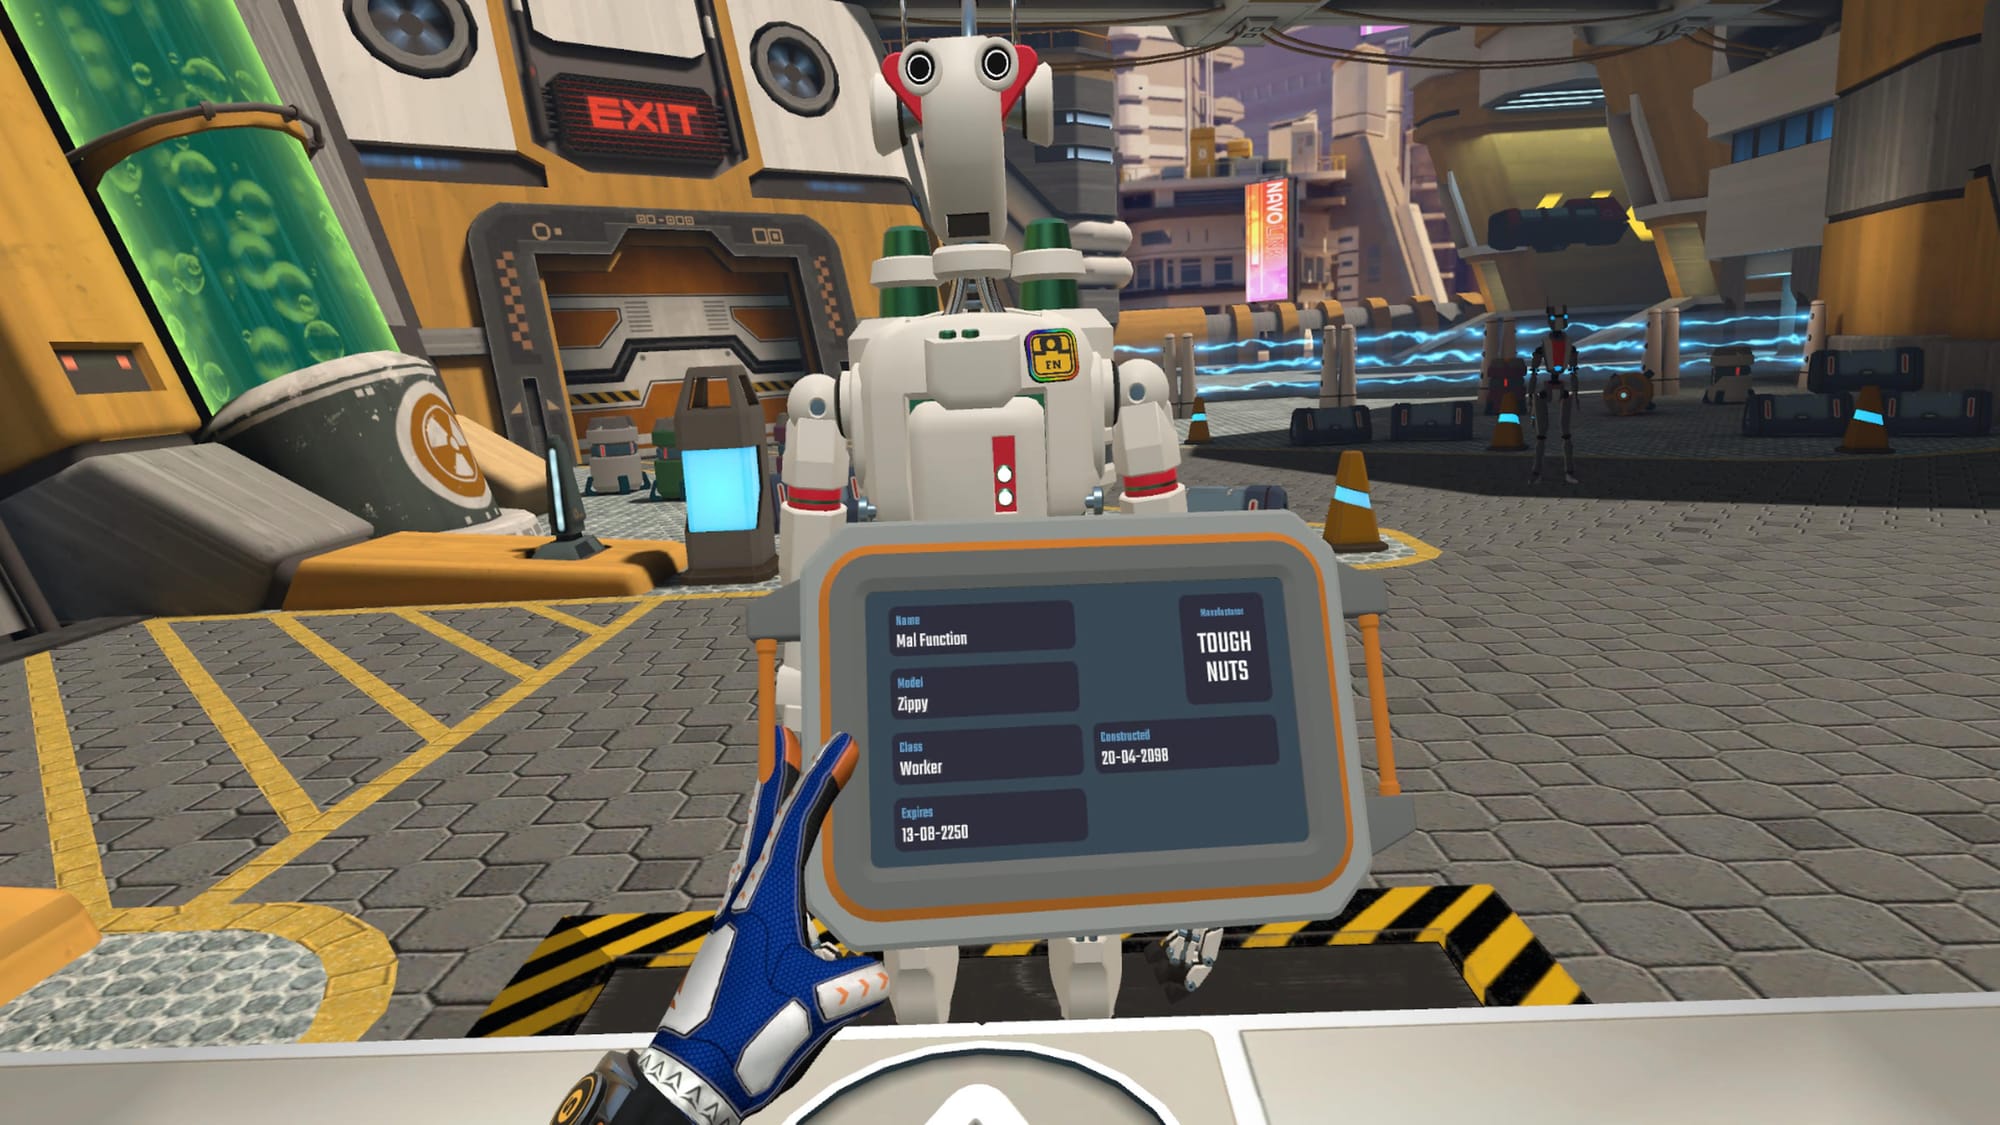 Border Bots VR - PSVR 2 screenshot